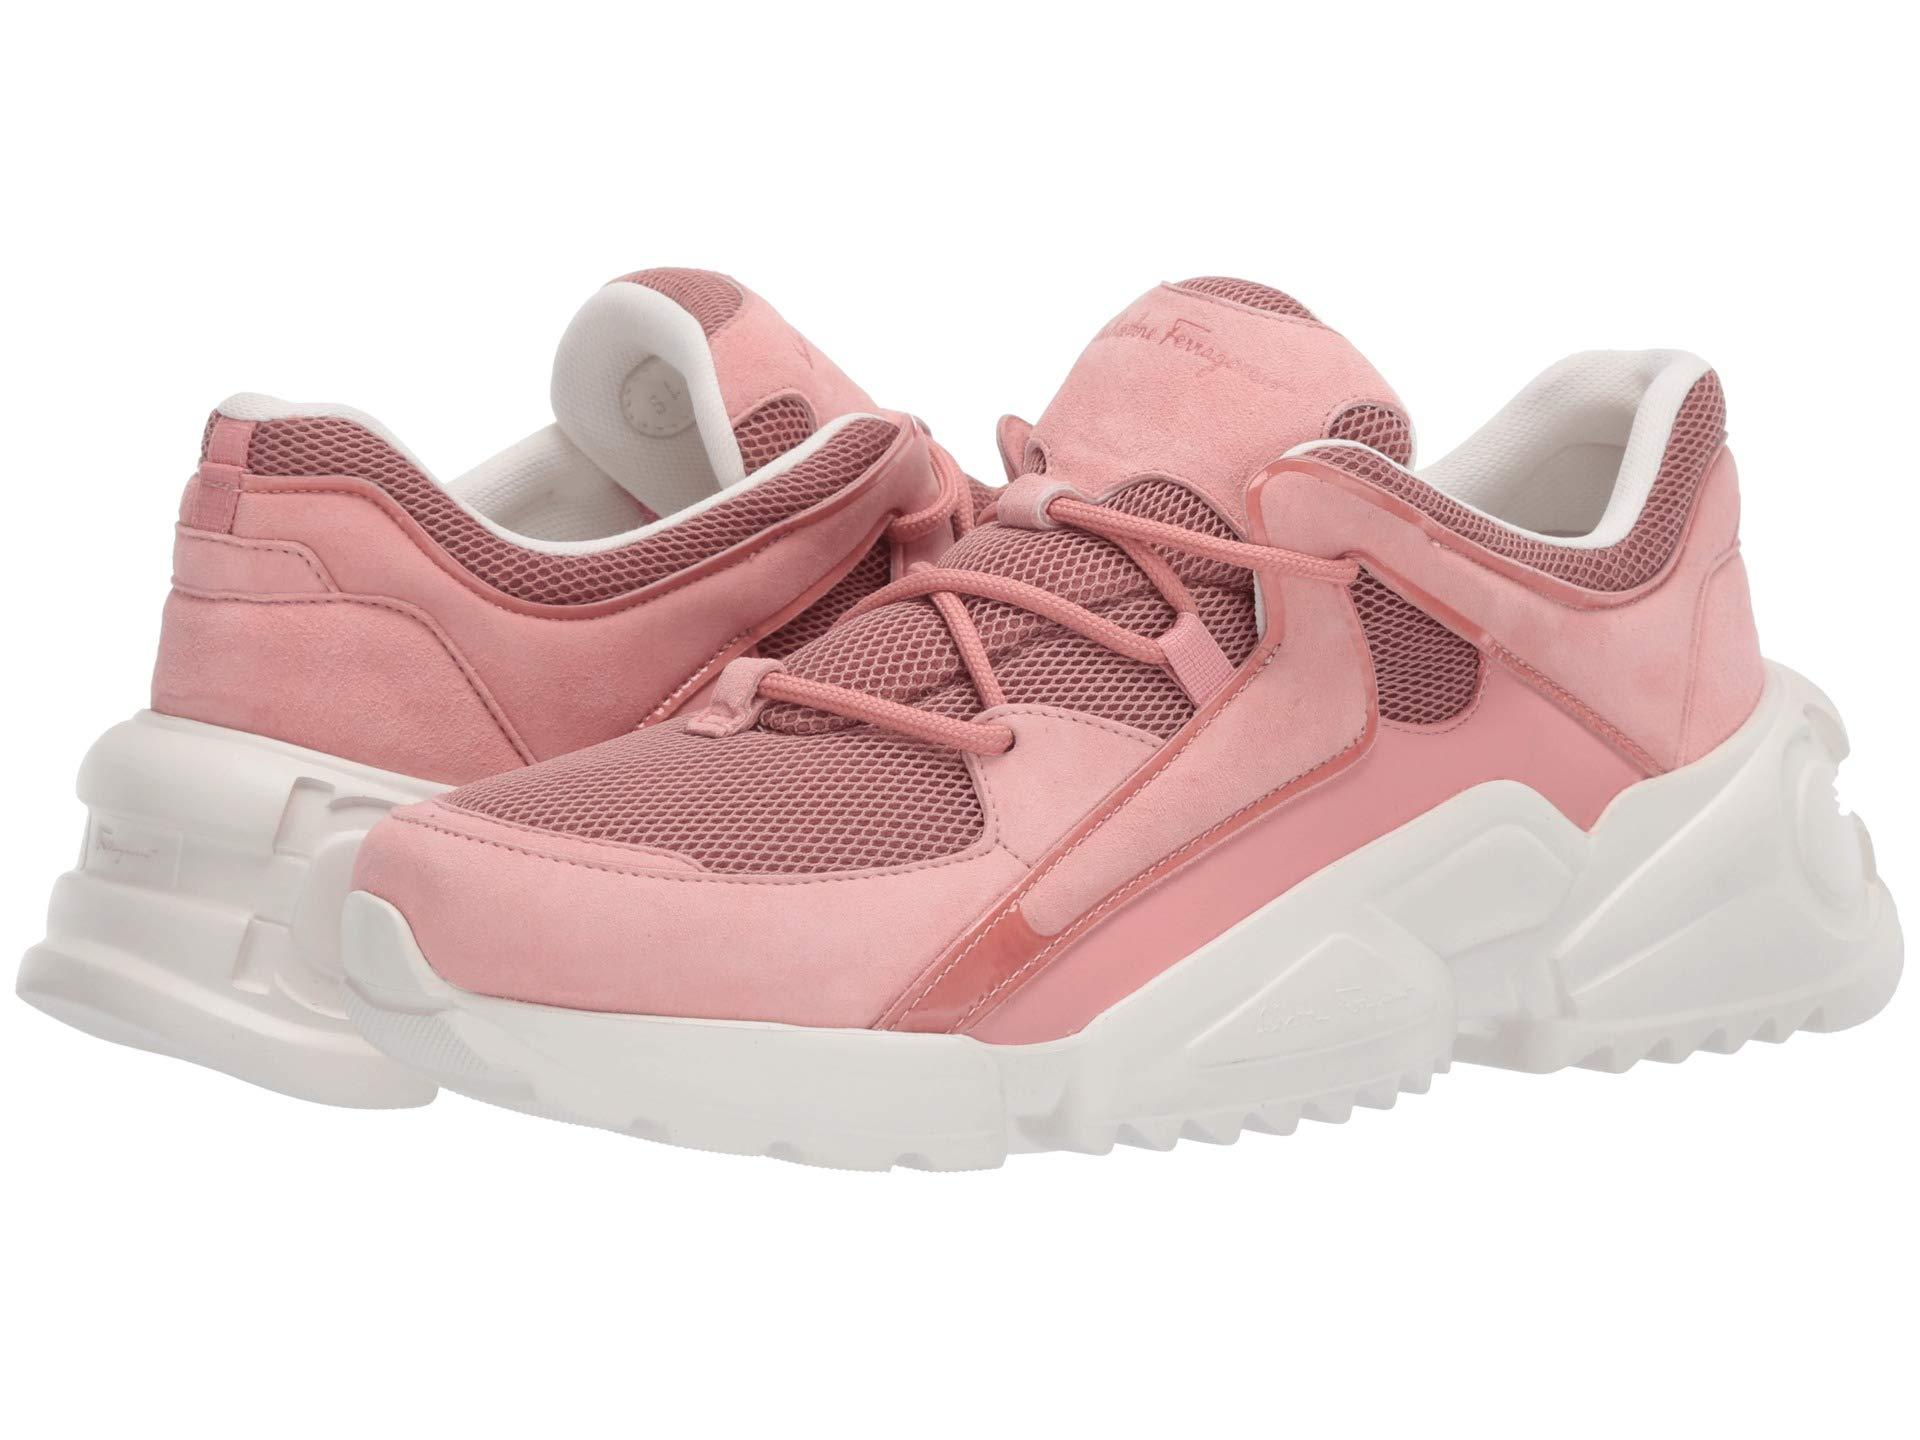 Ferragamo Sneakers Pink - Save 75% | Lyst